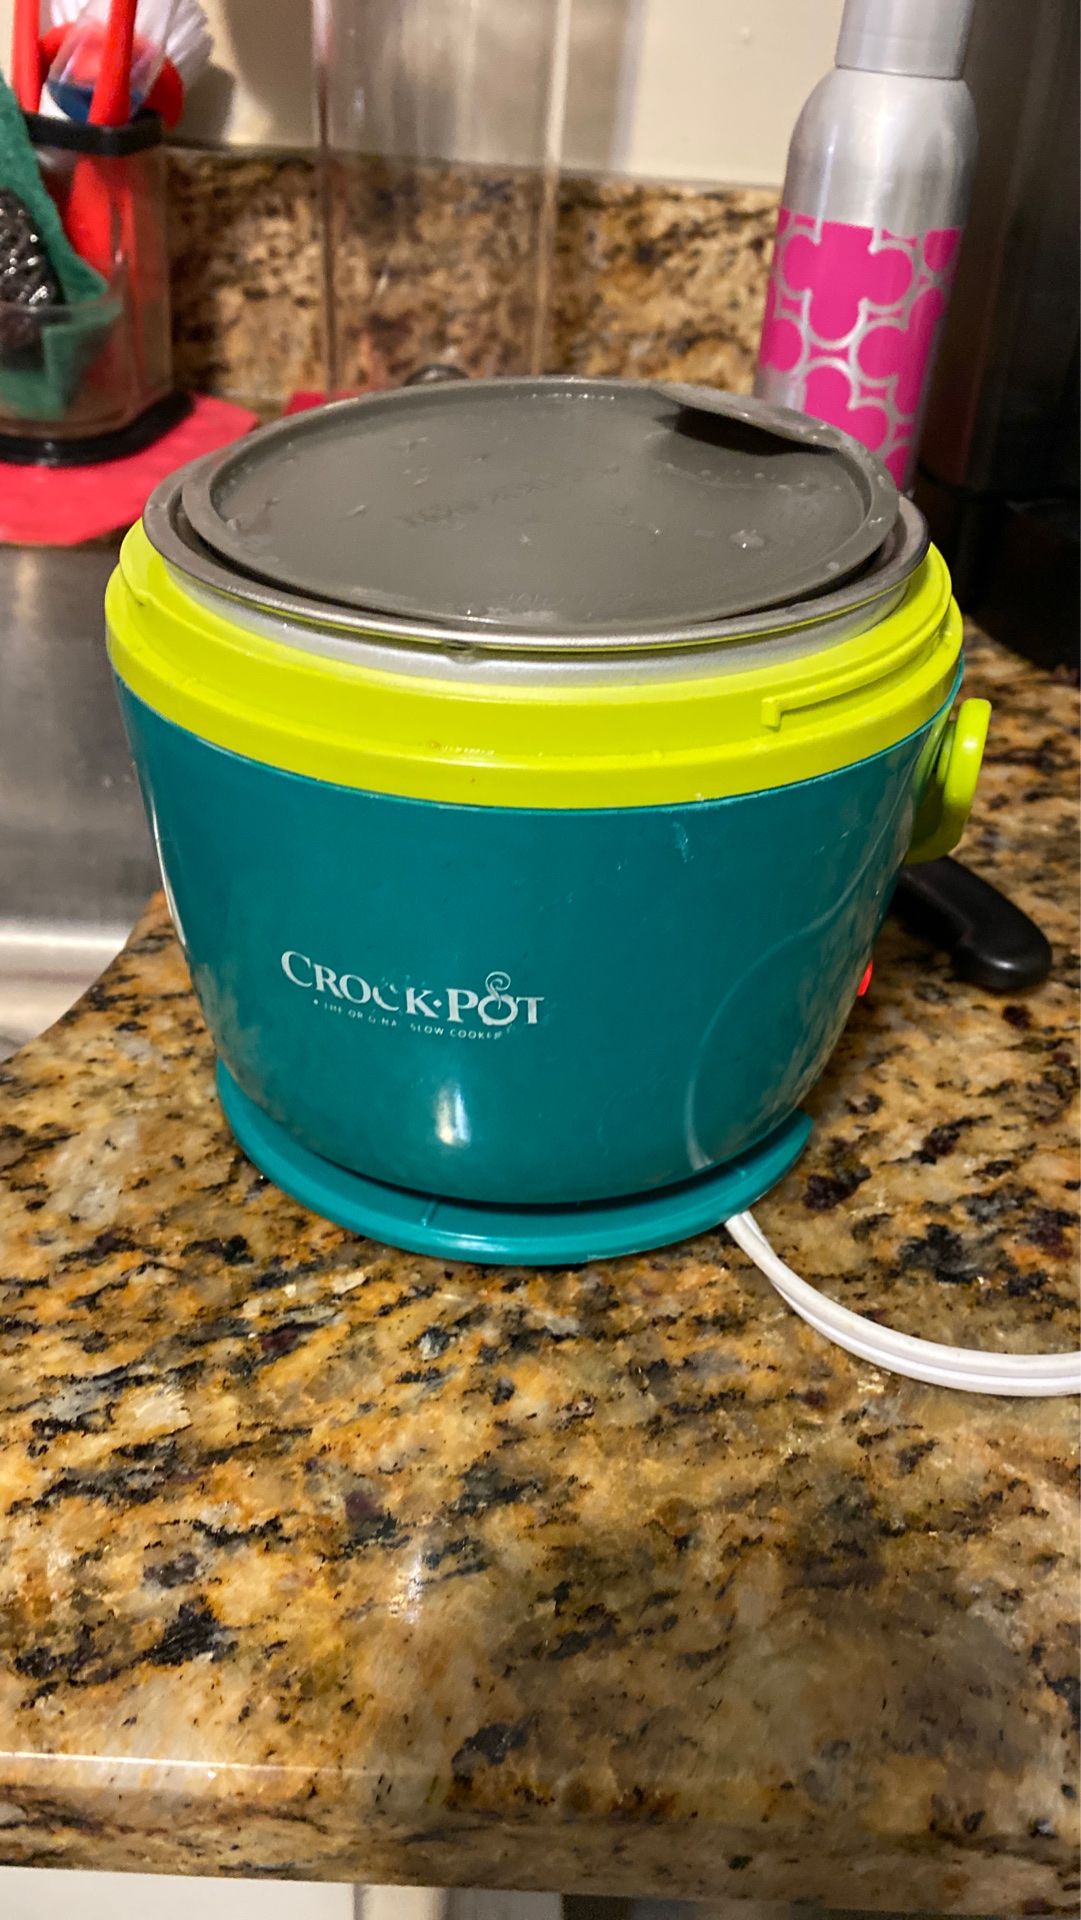 Crock pot/ rice cooker